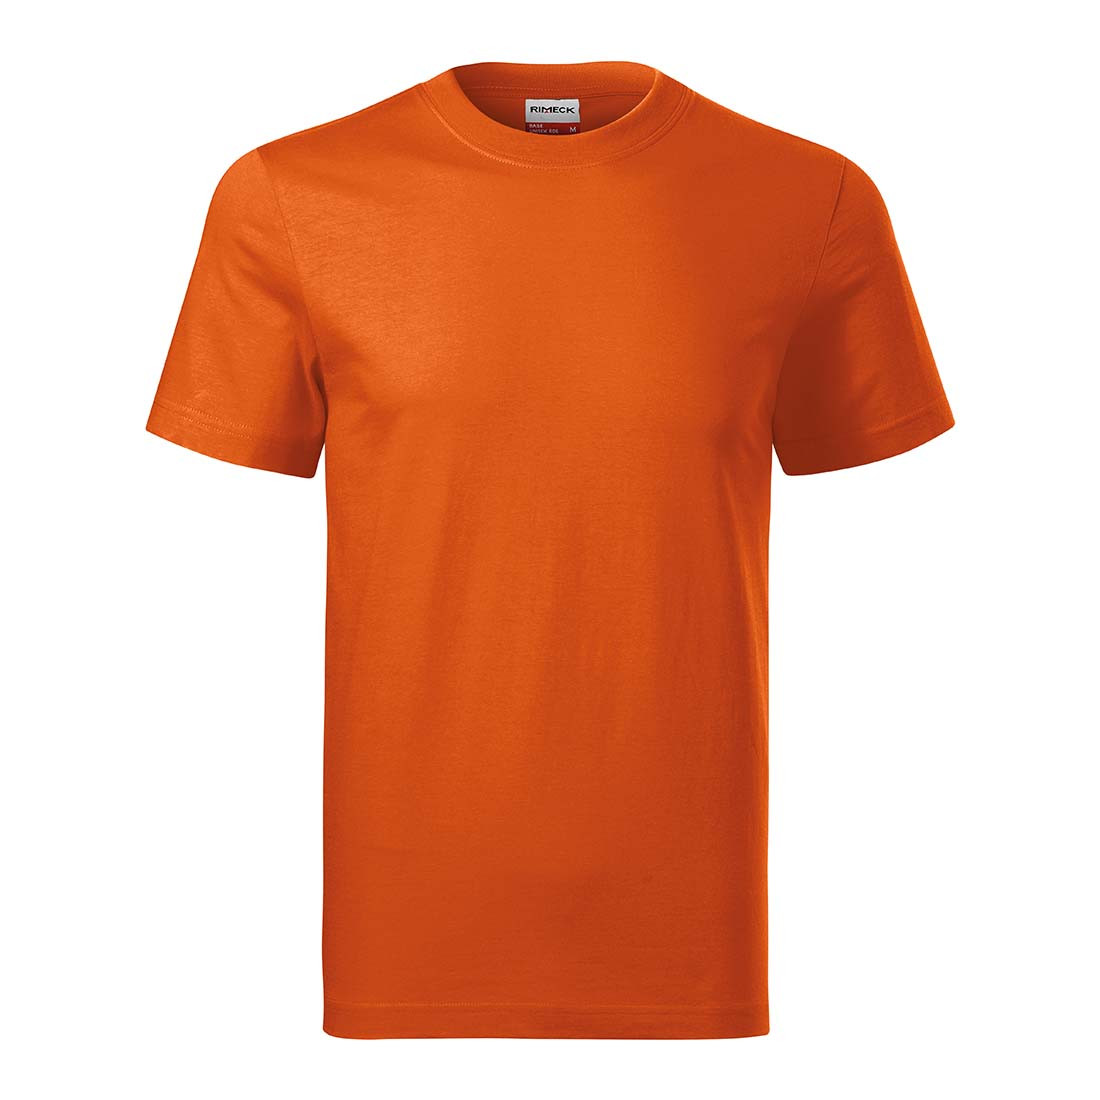 Camiseta unisex BASE - Ropa de protección